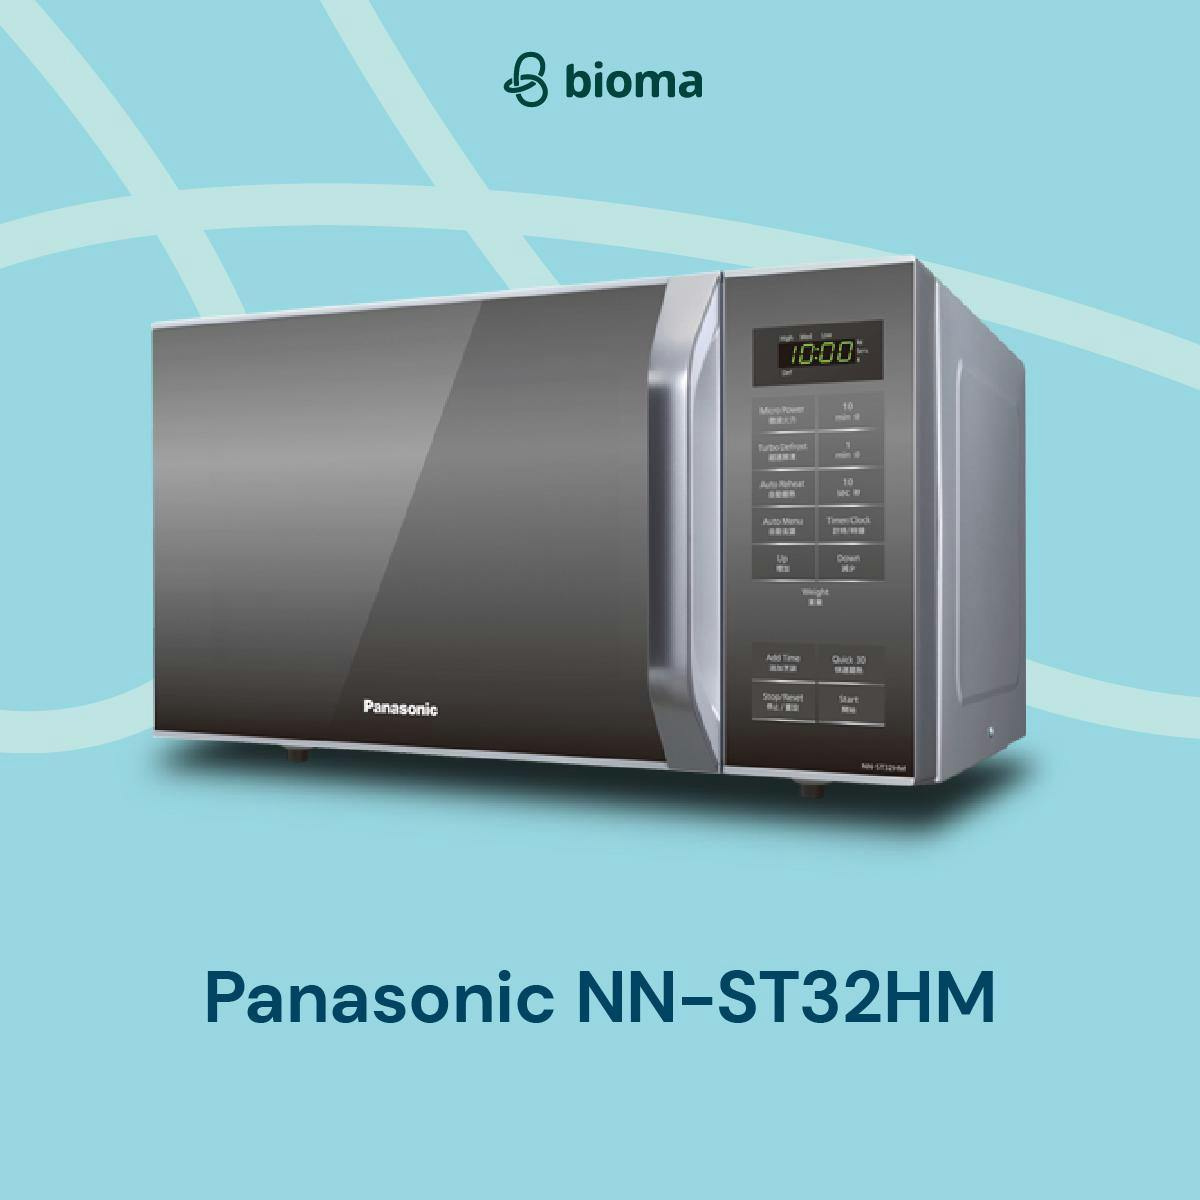 Panasonic NN-ST32HM